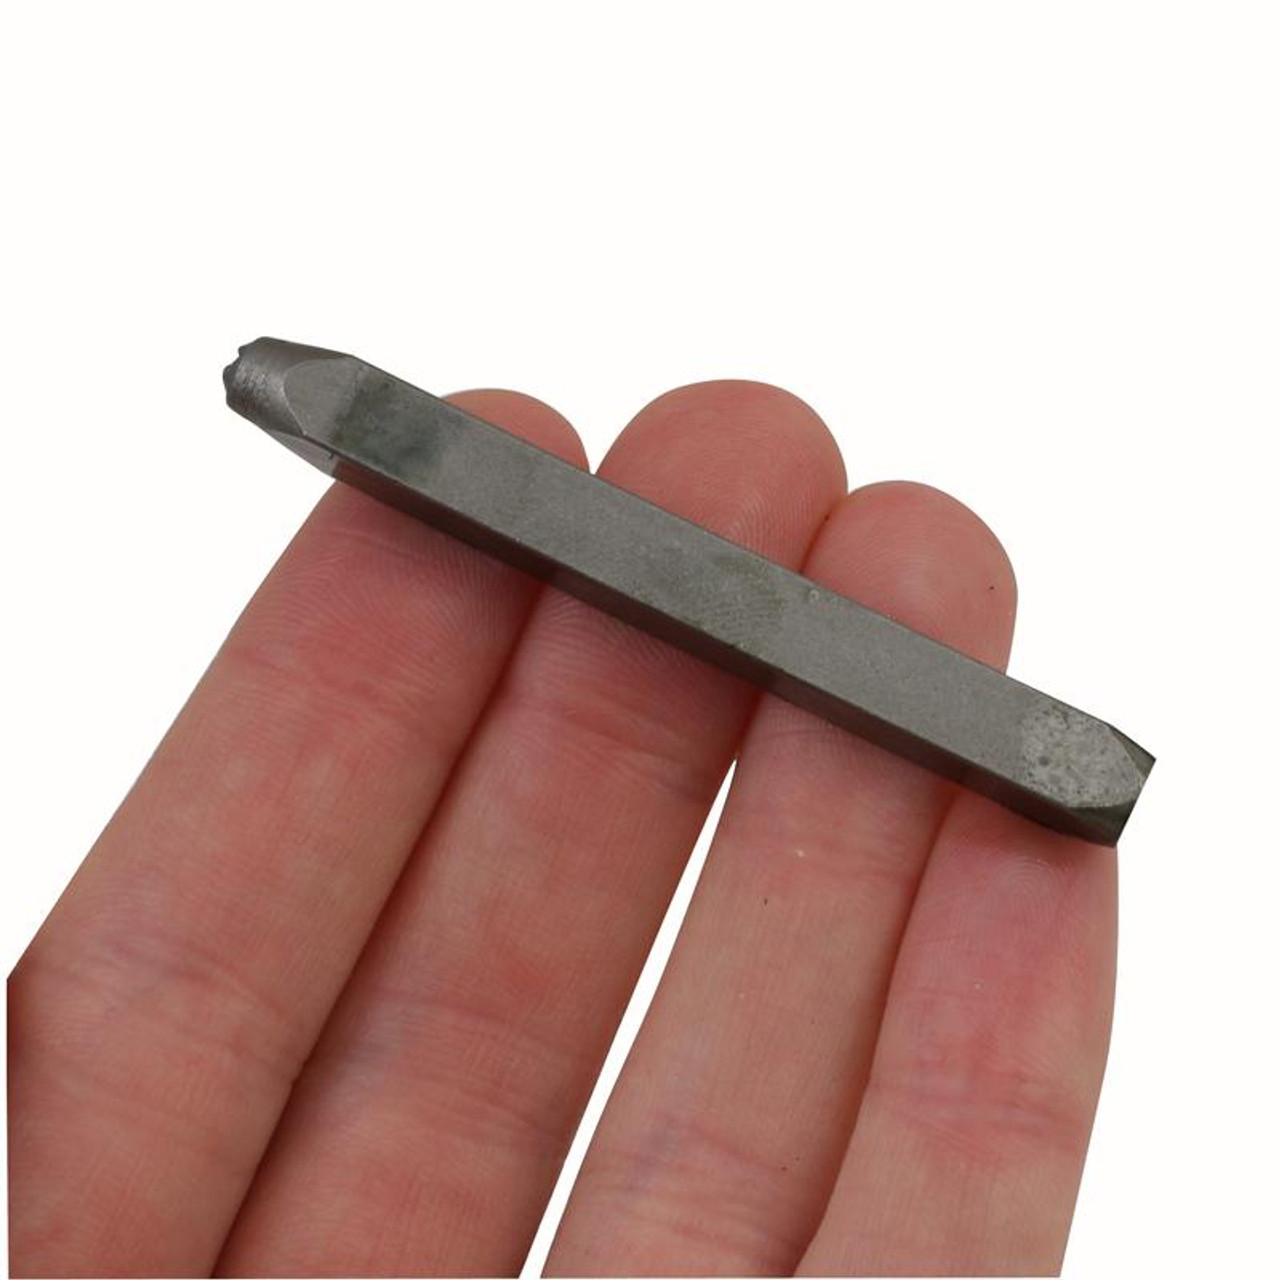 Vibro-graver Micro Engraver Hand Held Engraving Tool | Esslinger